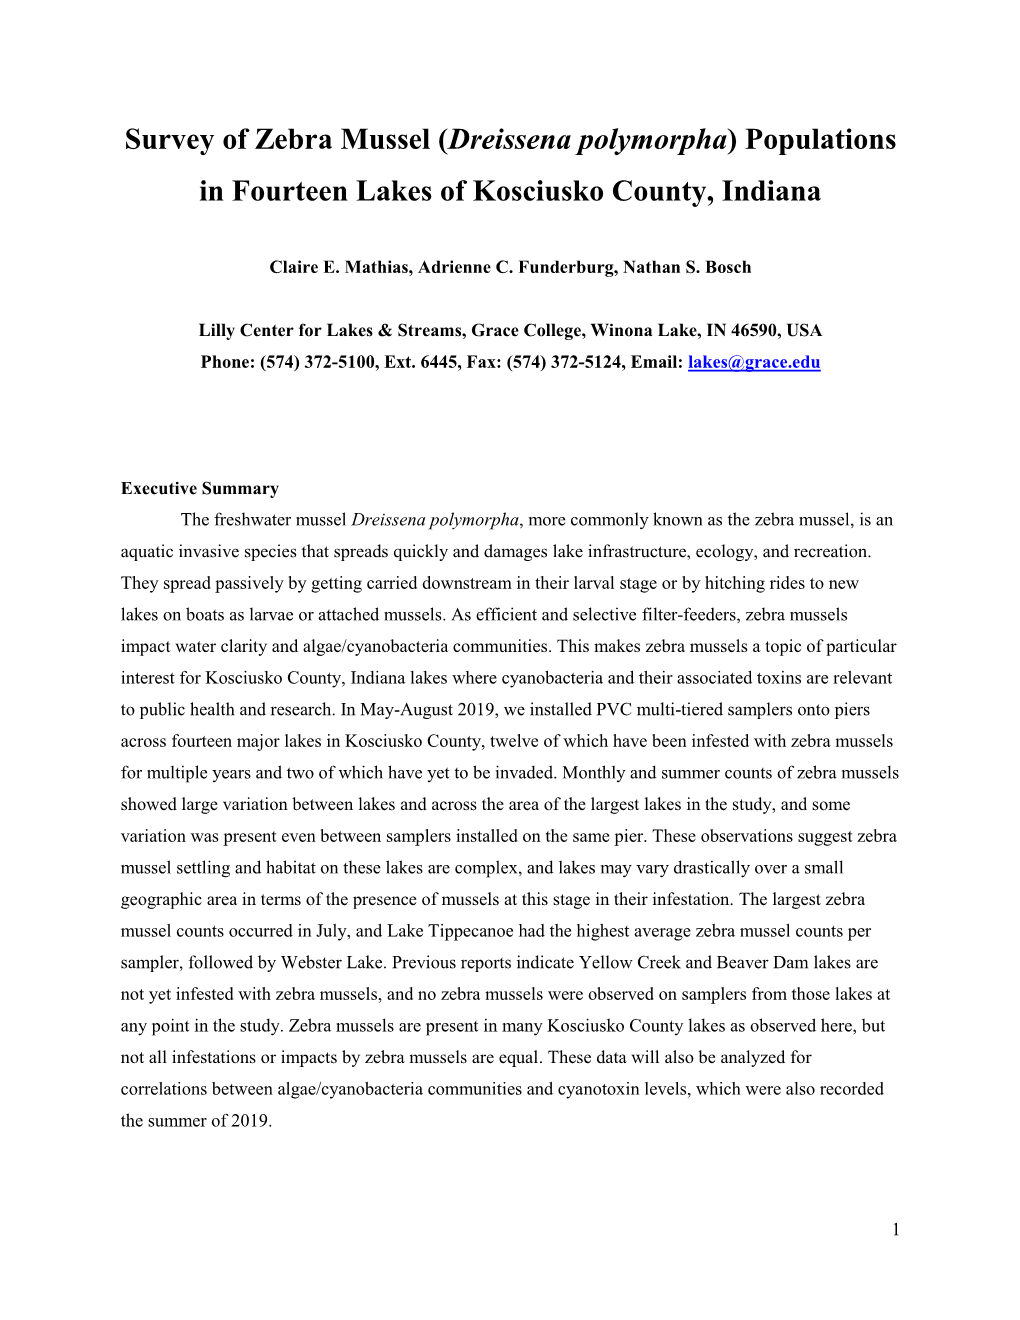 Survey of Zebra Mussel (Dreissena Polymorpha) Populations in Fourteen Lakes of Kosciusko County, Indiana